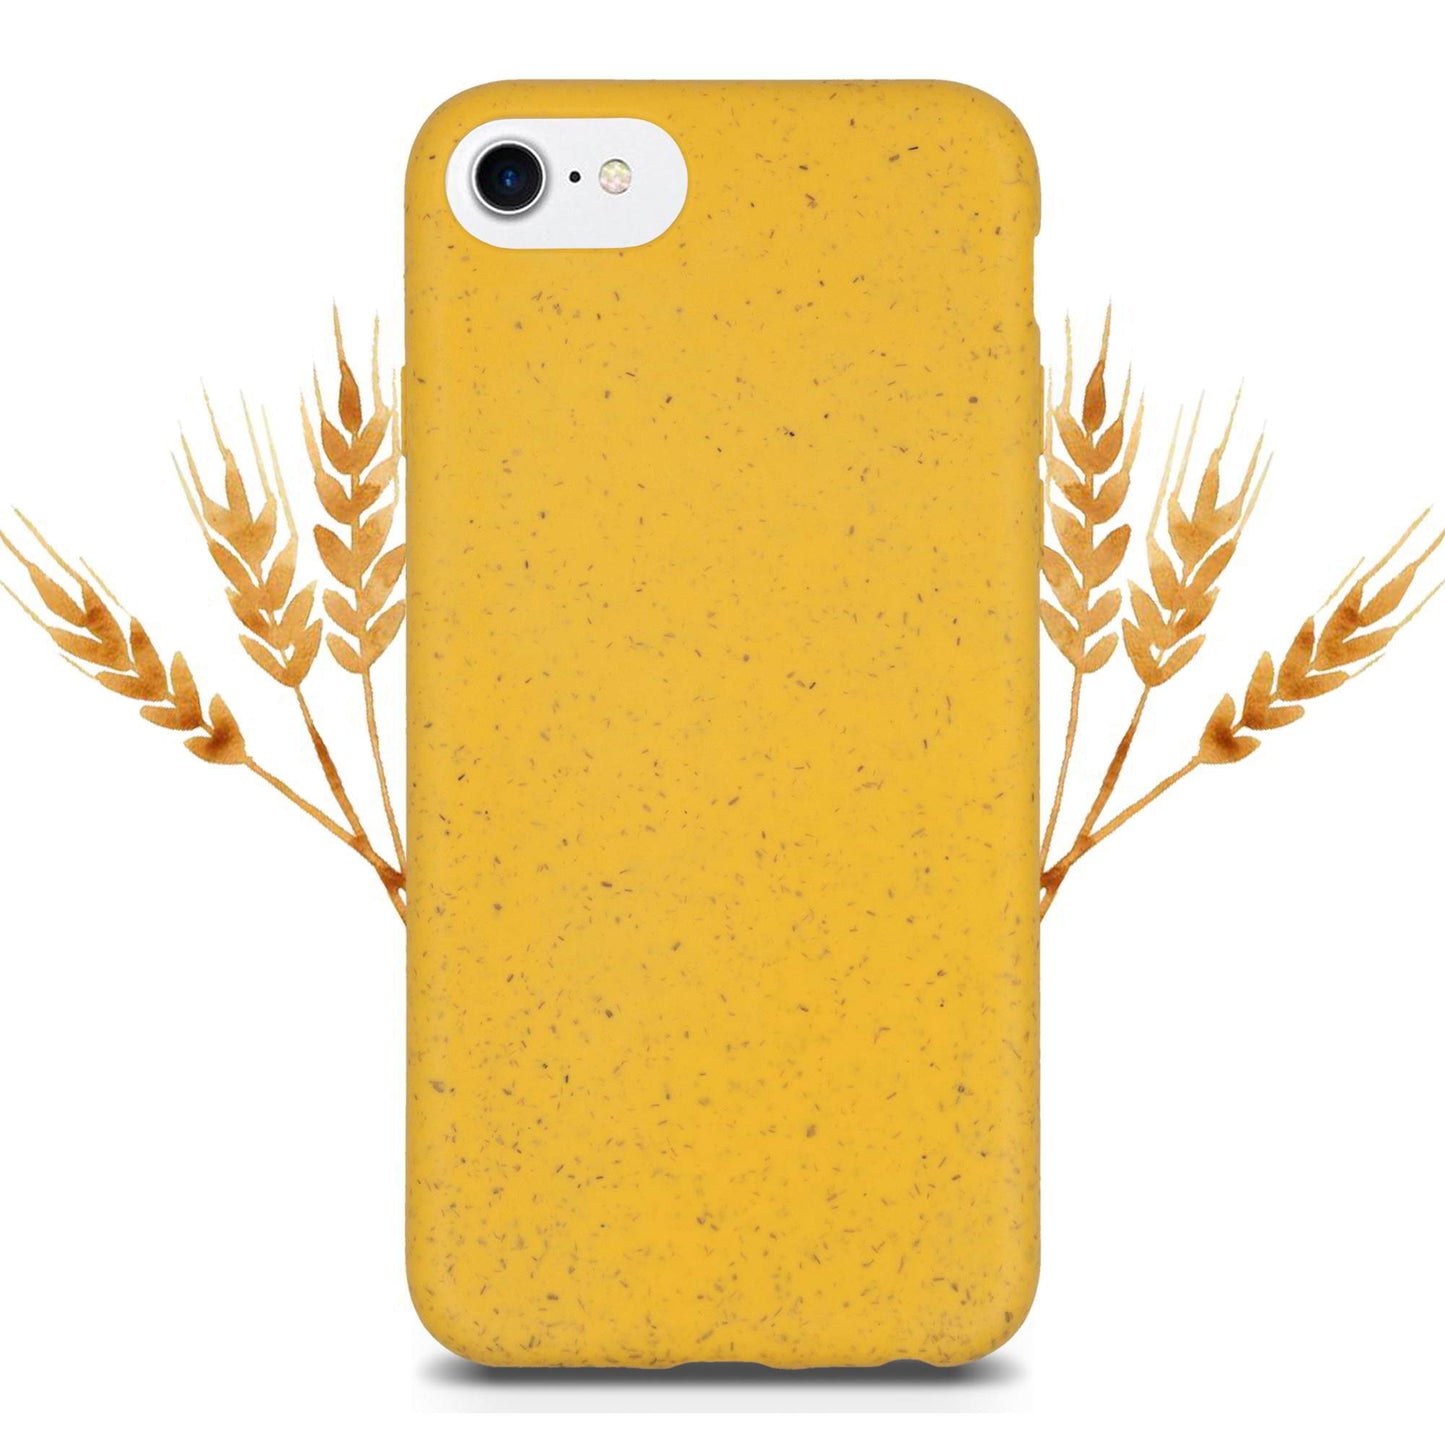 Biodegradable Phone Case - Sunshine Yellow